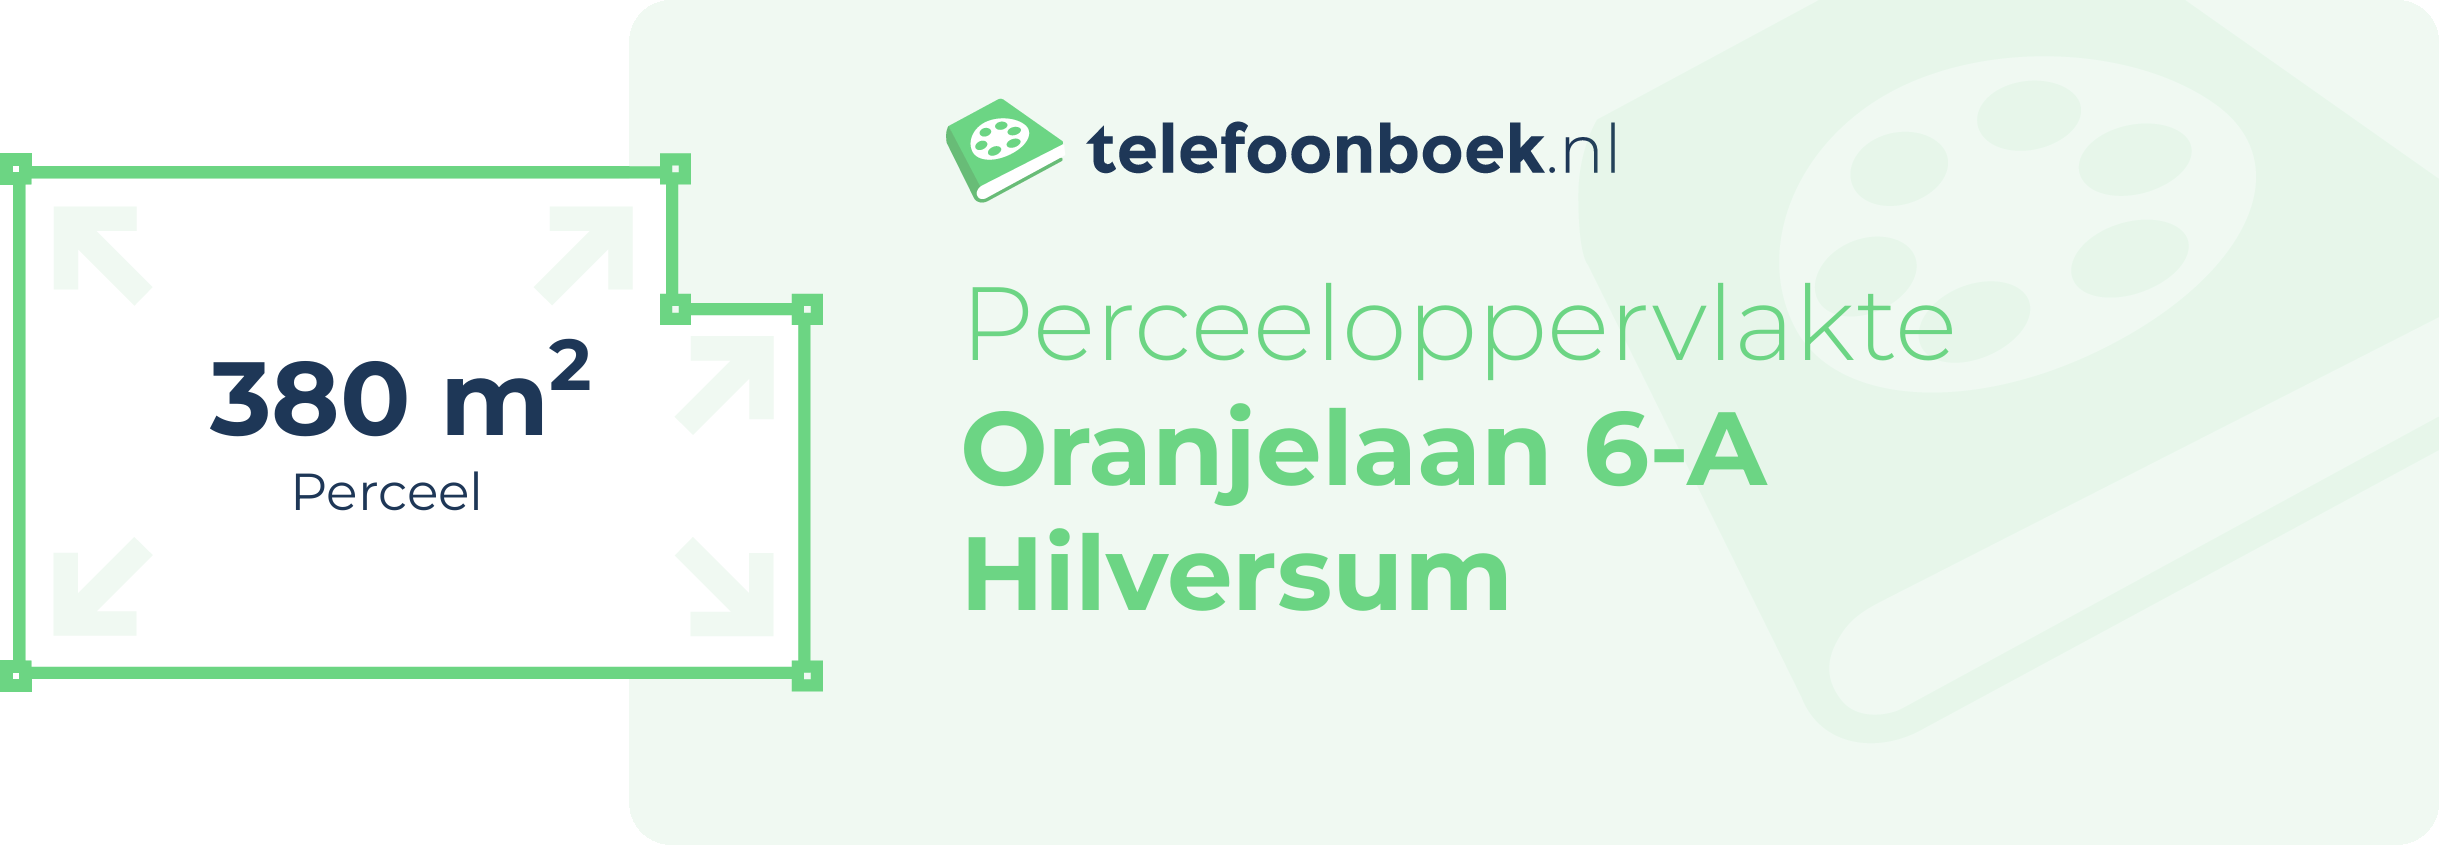 Perceeloppervlakte Oranjelaan 6-A Hilversum